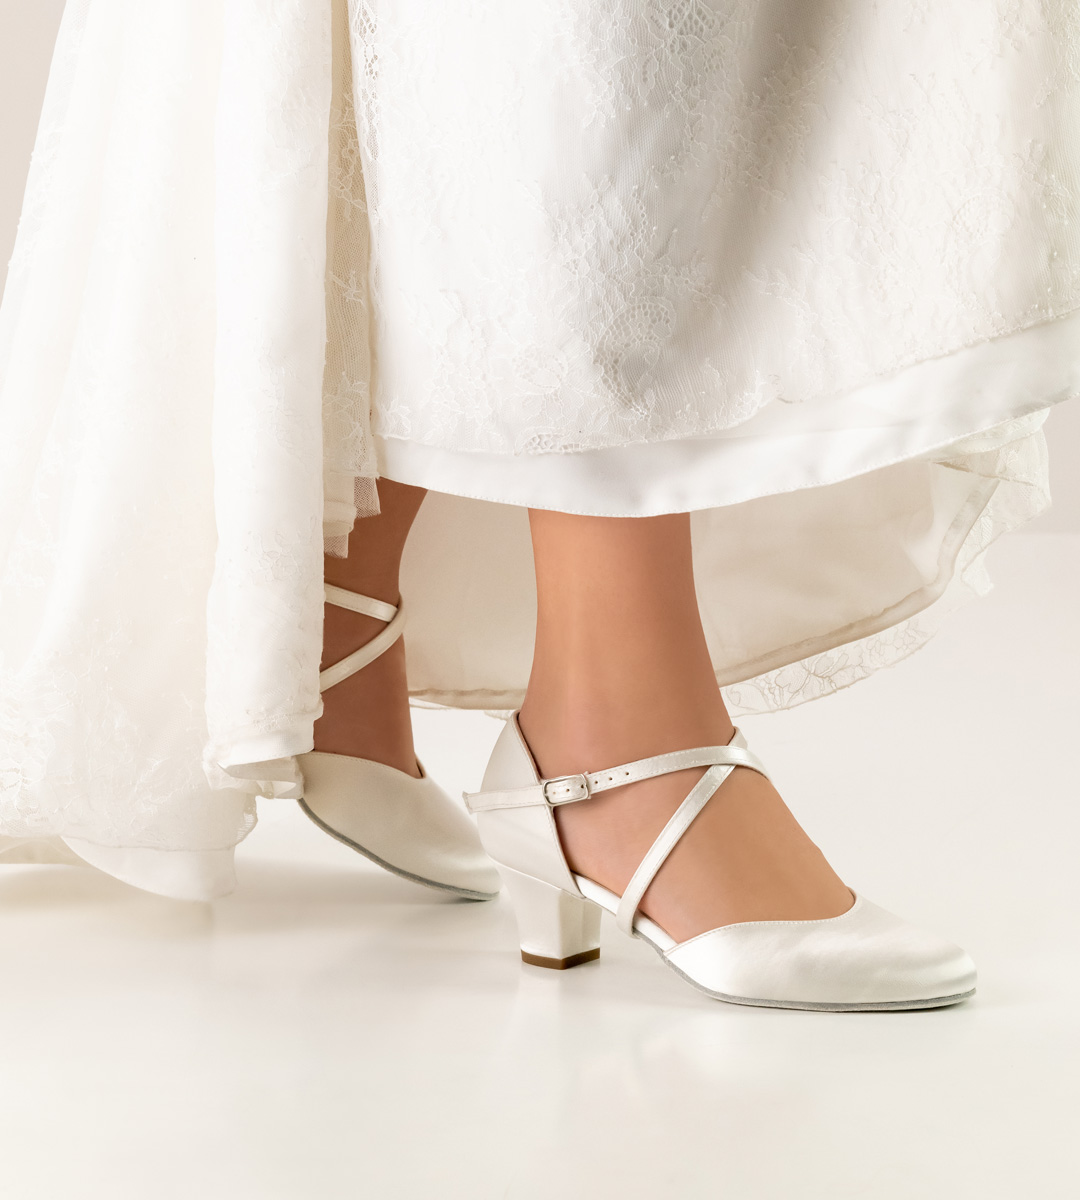 4.5 cm high Werner Kern bridal shoe in satin white